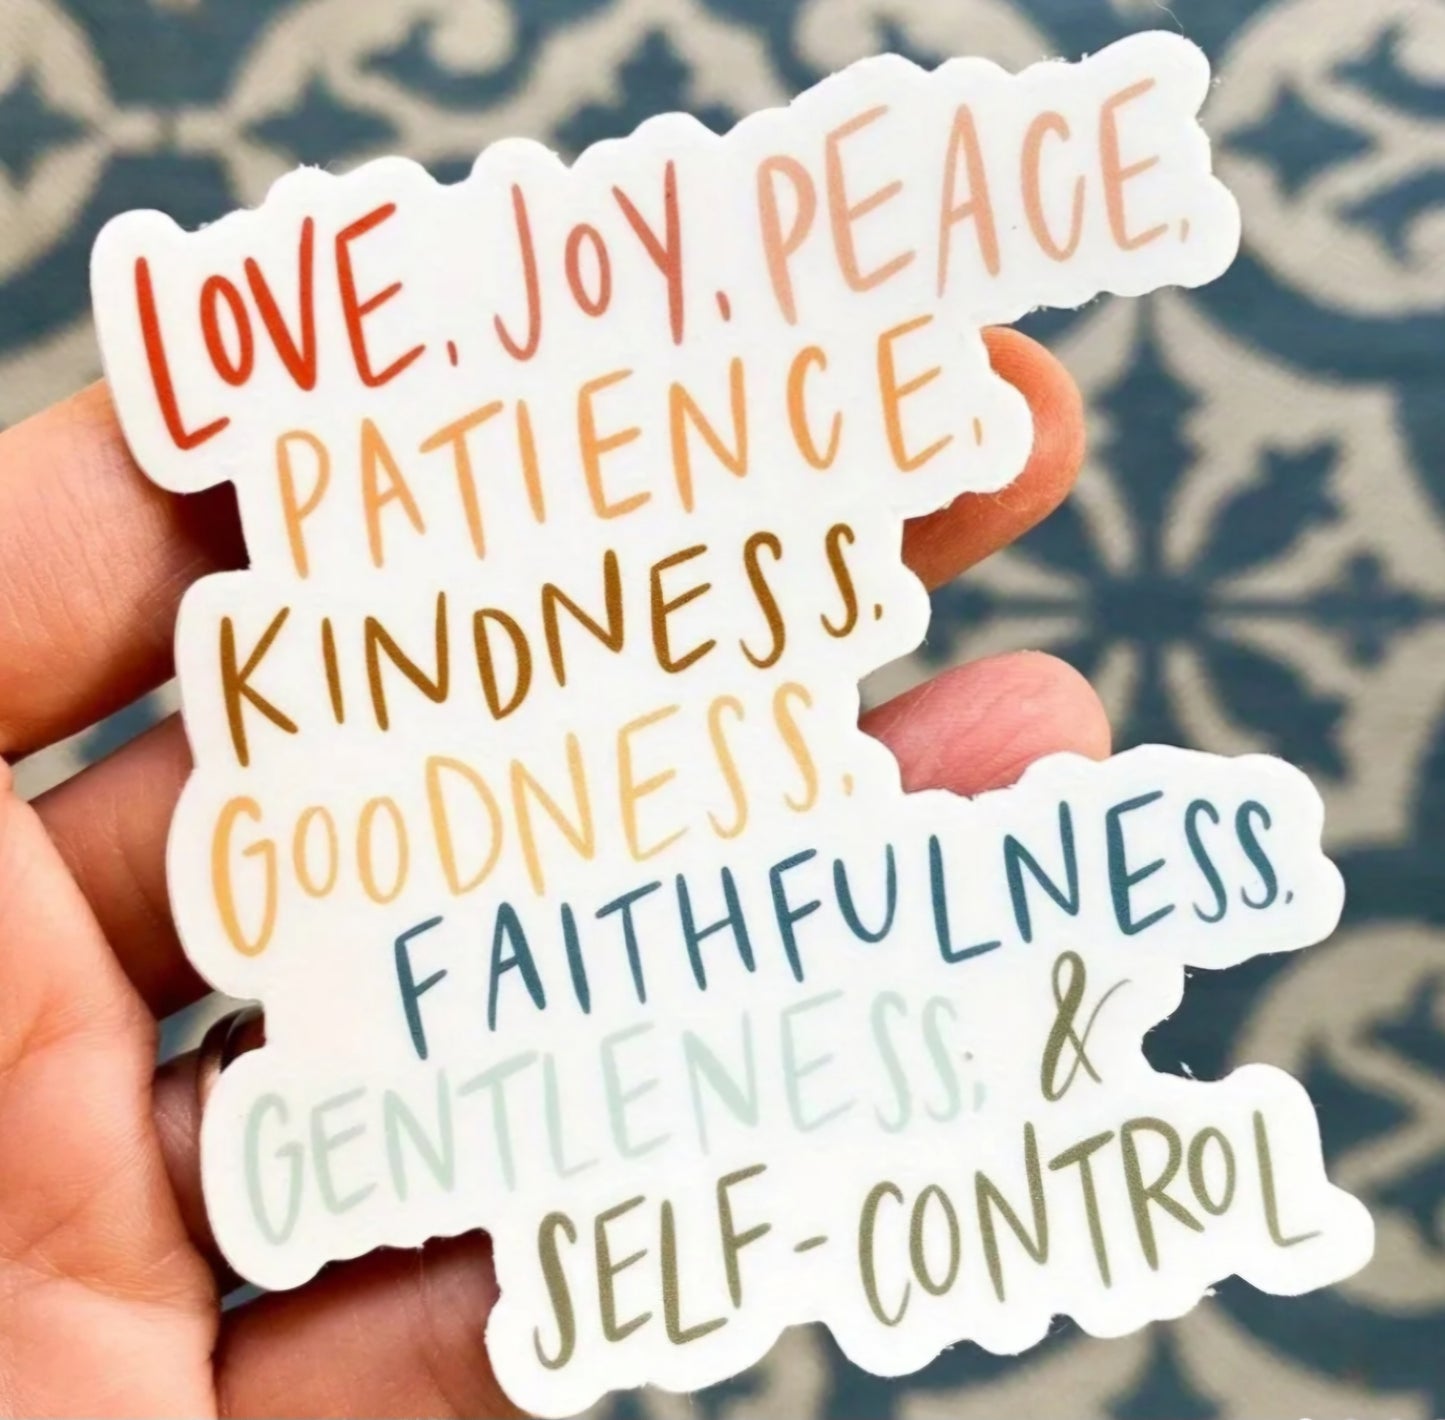 Love, Joy, Peace Sticker